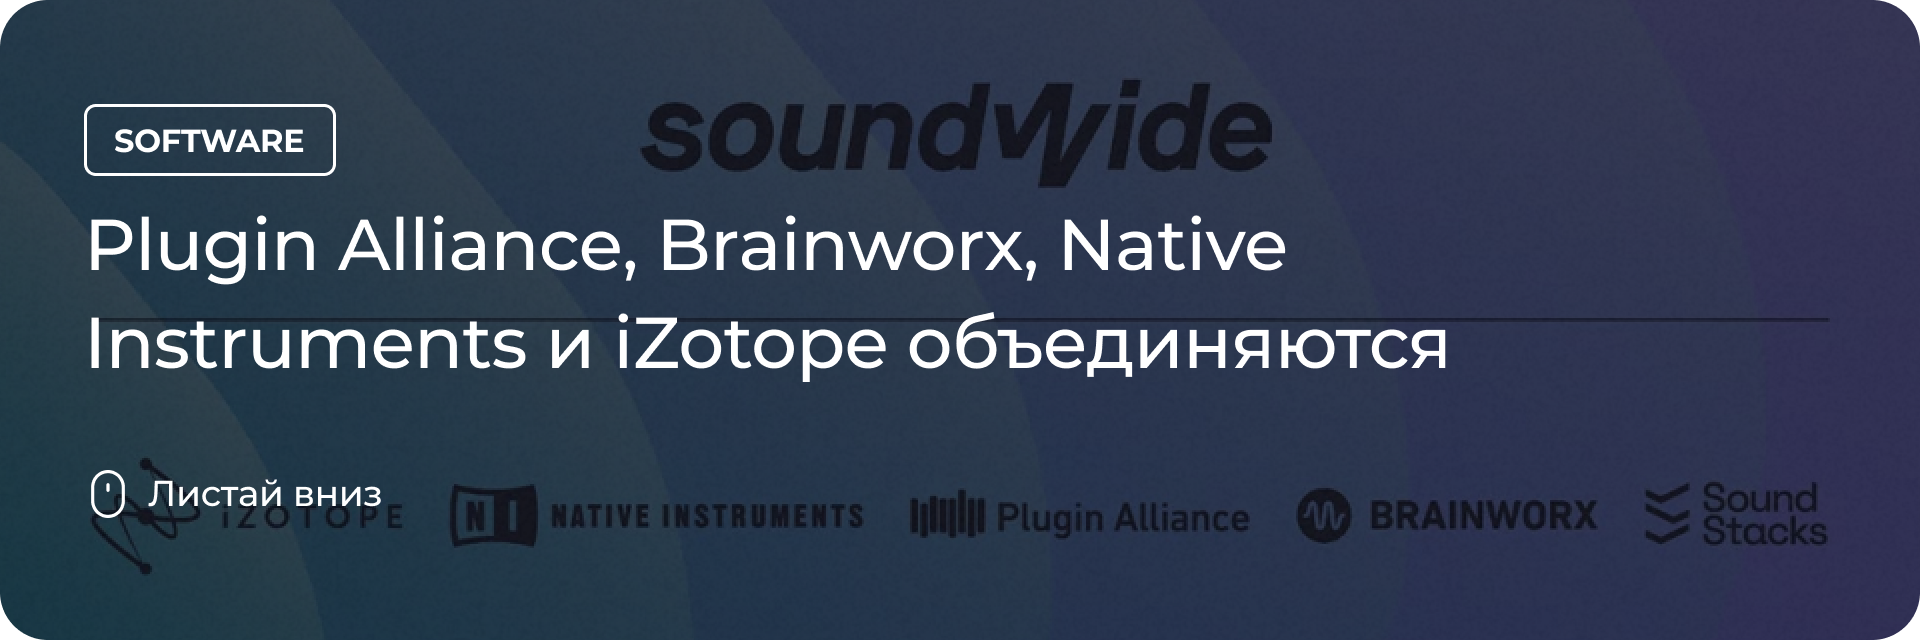 Plugin Alliance, Brainworx, Native Instruments и iZotope объединяются